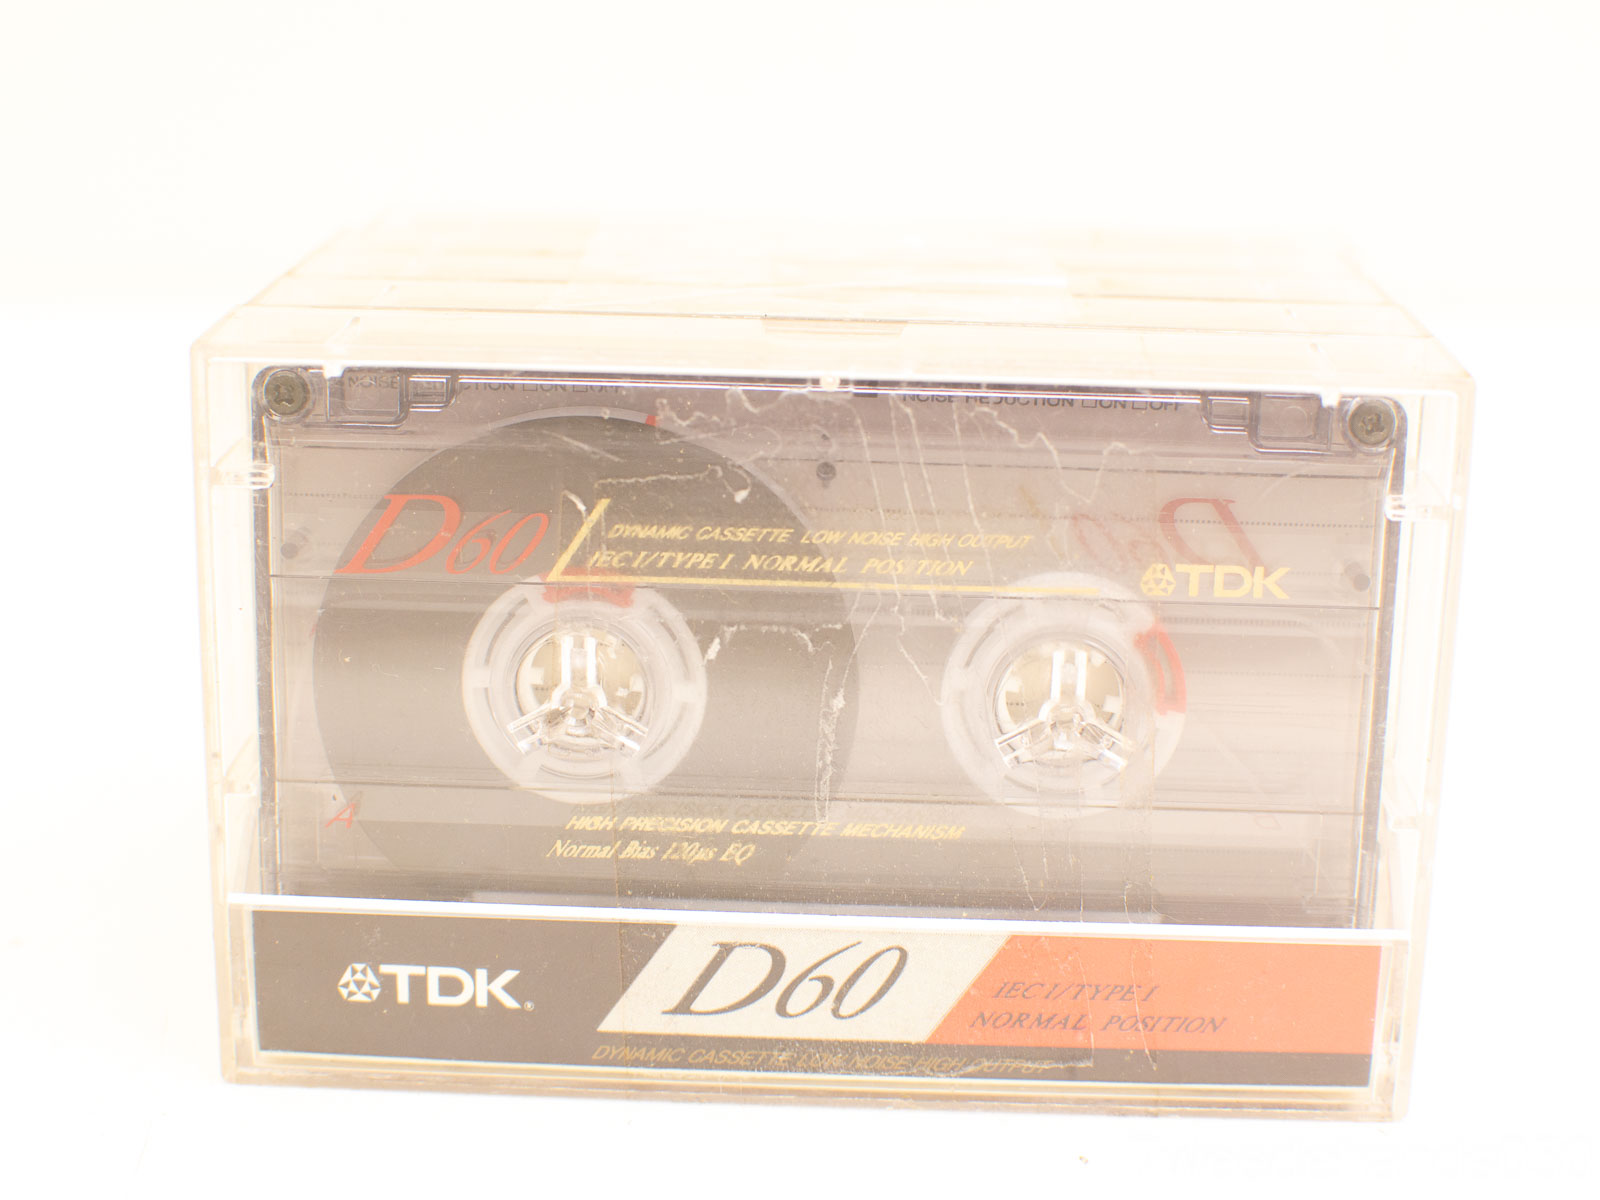 5 TDK cassettebandjes 31344